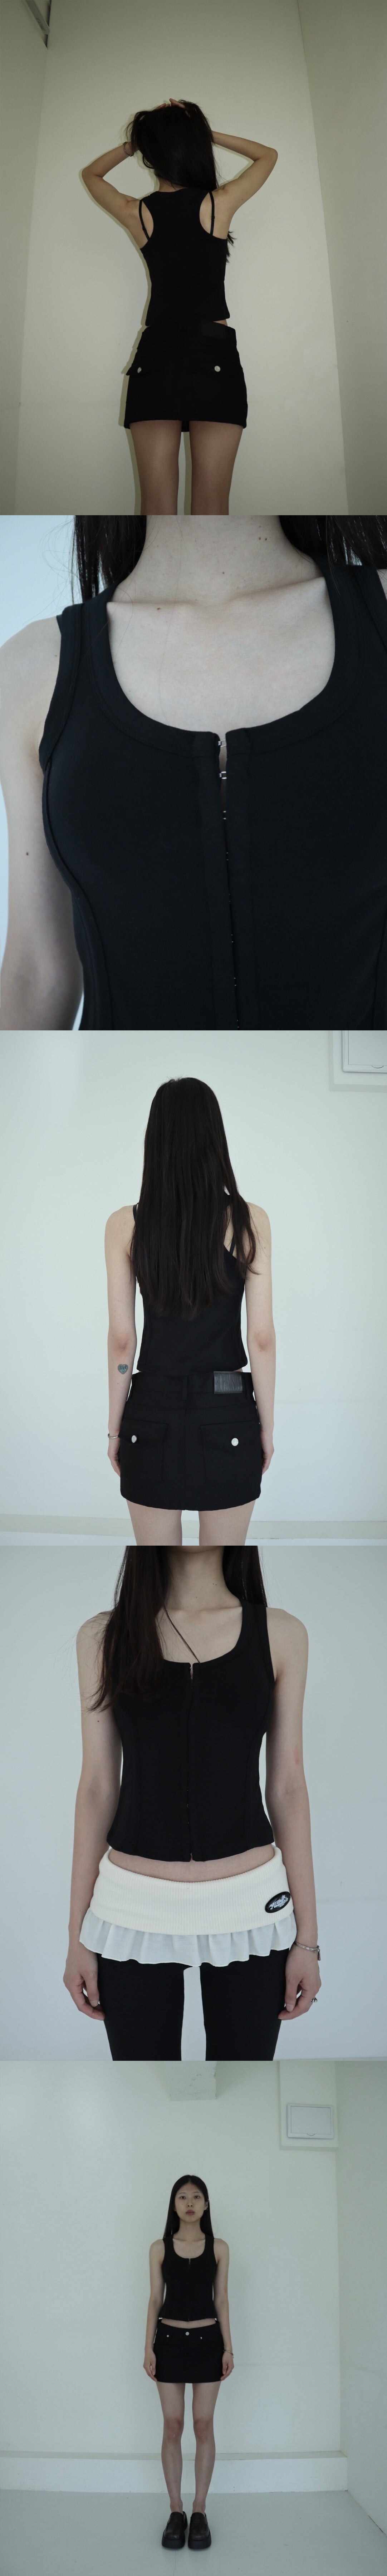 Silhouette corset top(b)